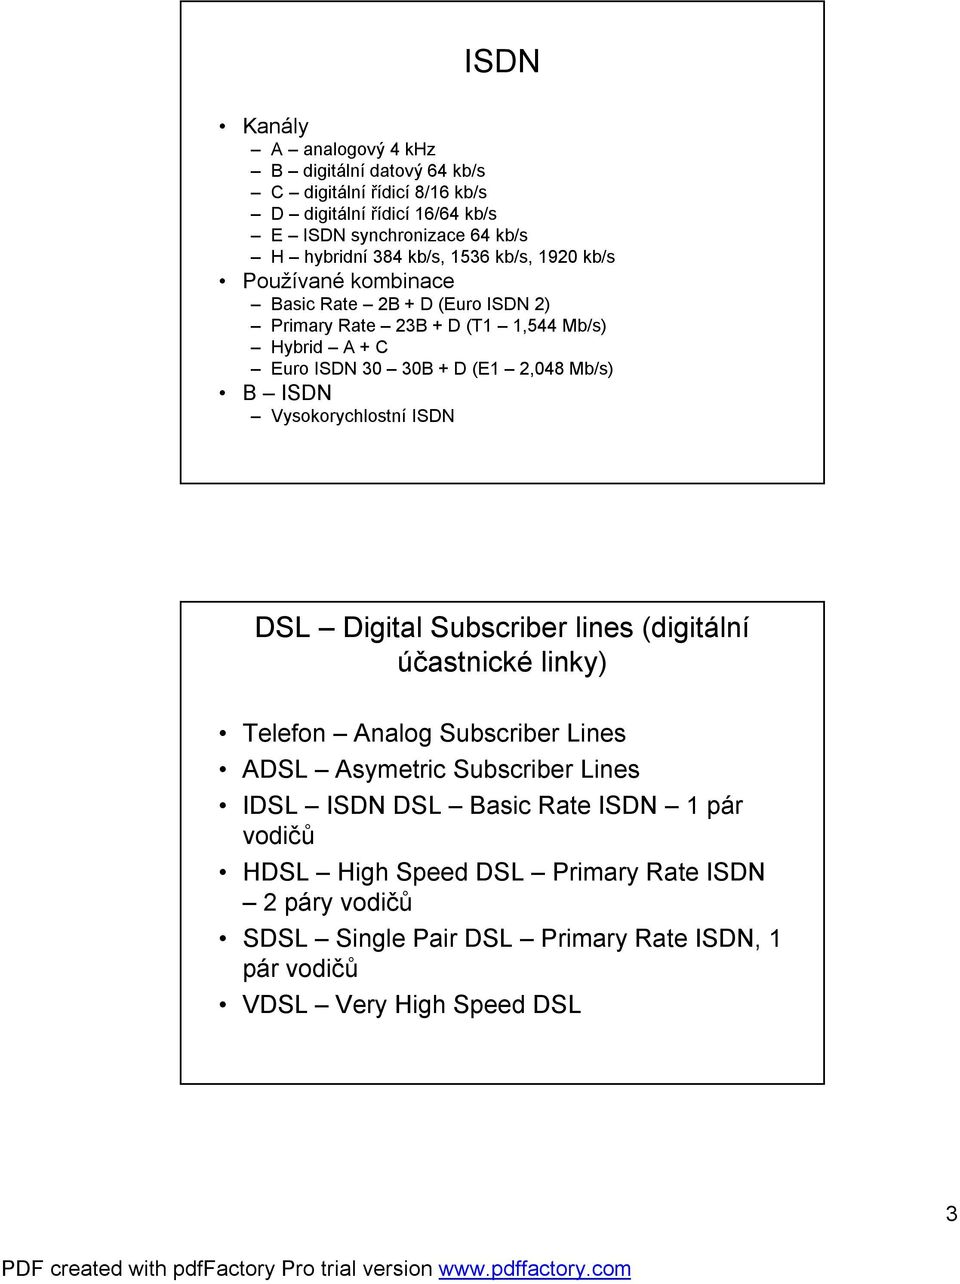 Mb/s) B ISDN Vysokorychlostní ISDN DSL Digital Subscriber lines (digitální účastnické linky) Telefon Analog Subscriber Lines ADSL Asymetric Subscriber Lines IDSL